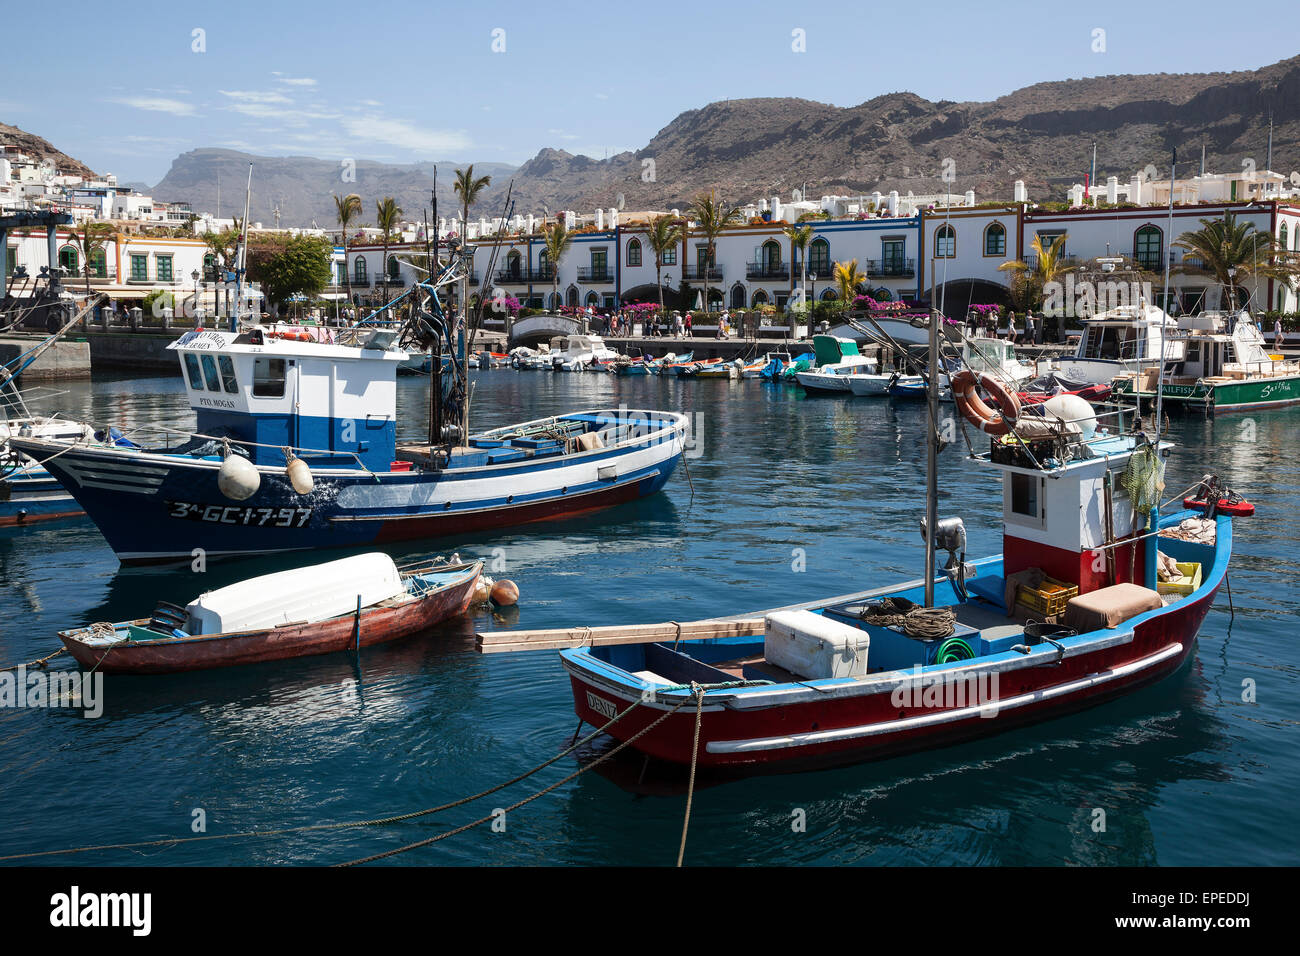 Fishing boats in the harbour, Puerto de Mogan, Gran Canaria, Canary Islands, Spain Stock Photo